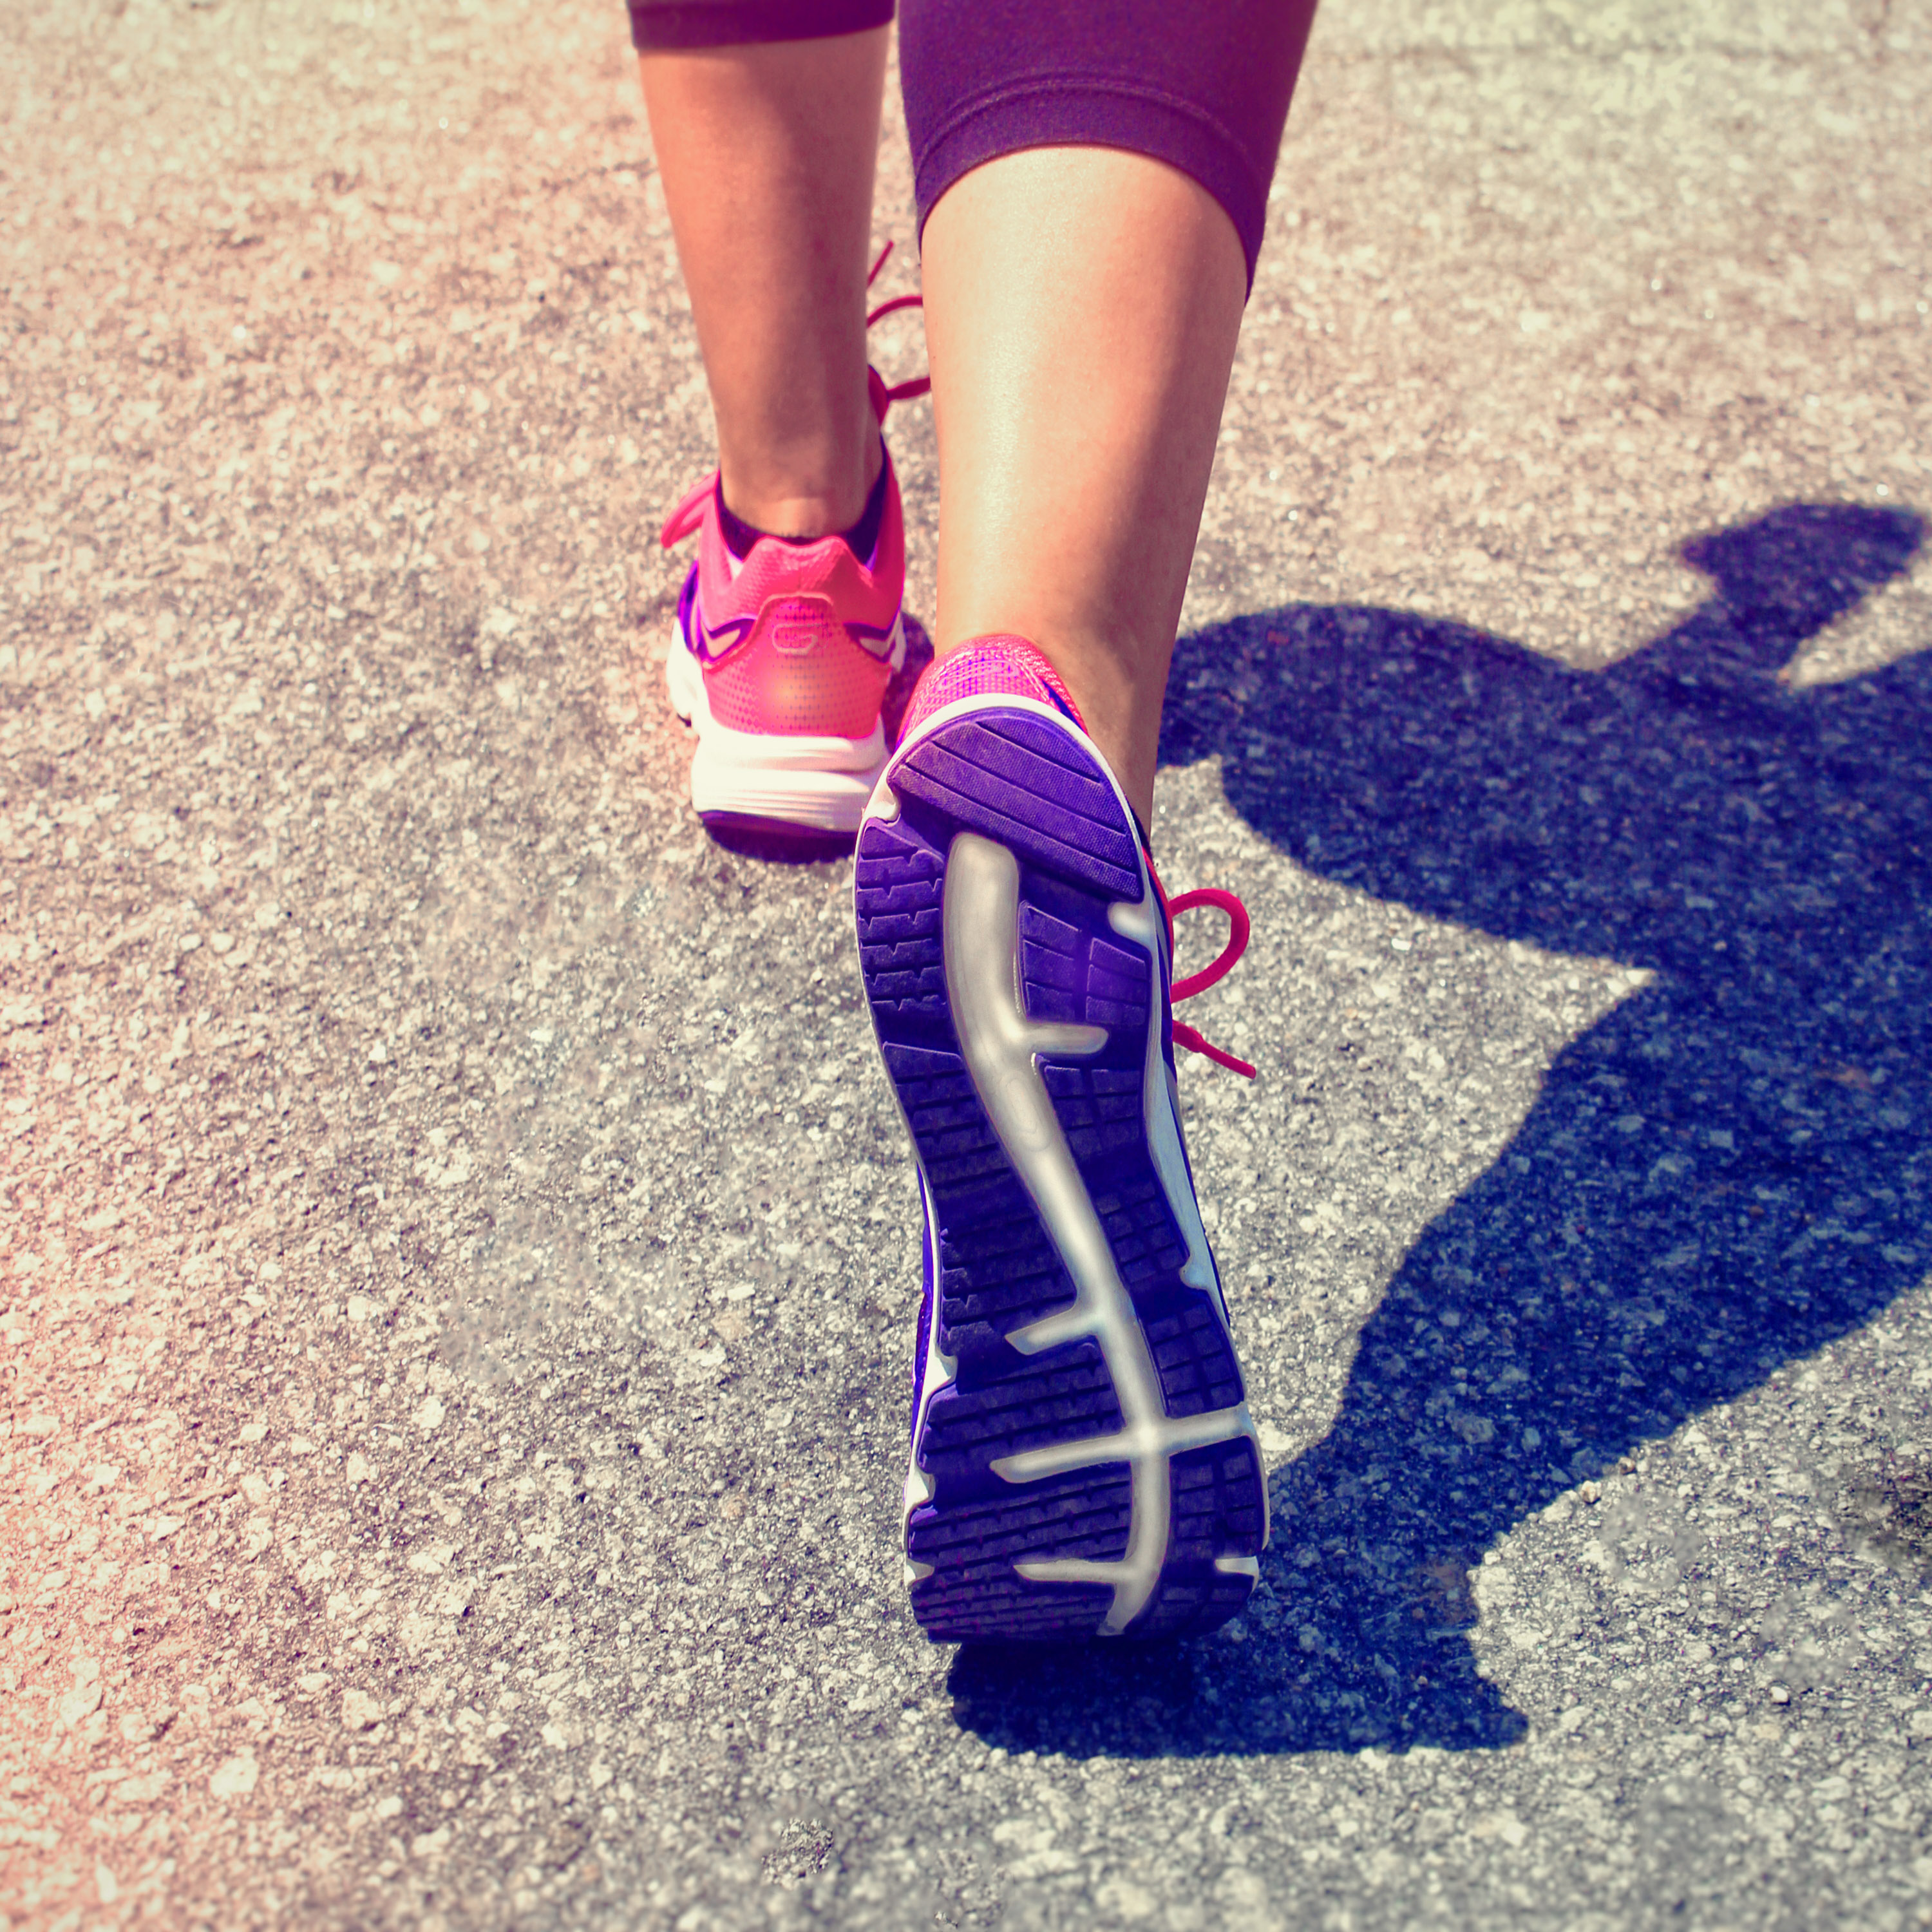 Female Runner Feet - Women Fitness, Action, Road, Slim, Shoes, HQ Photo